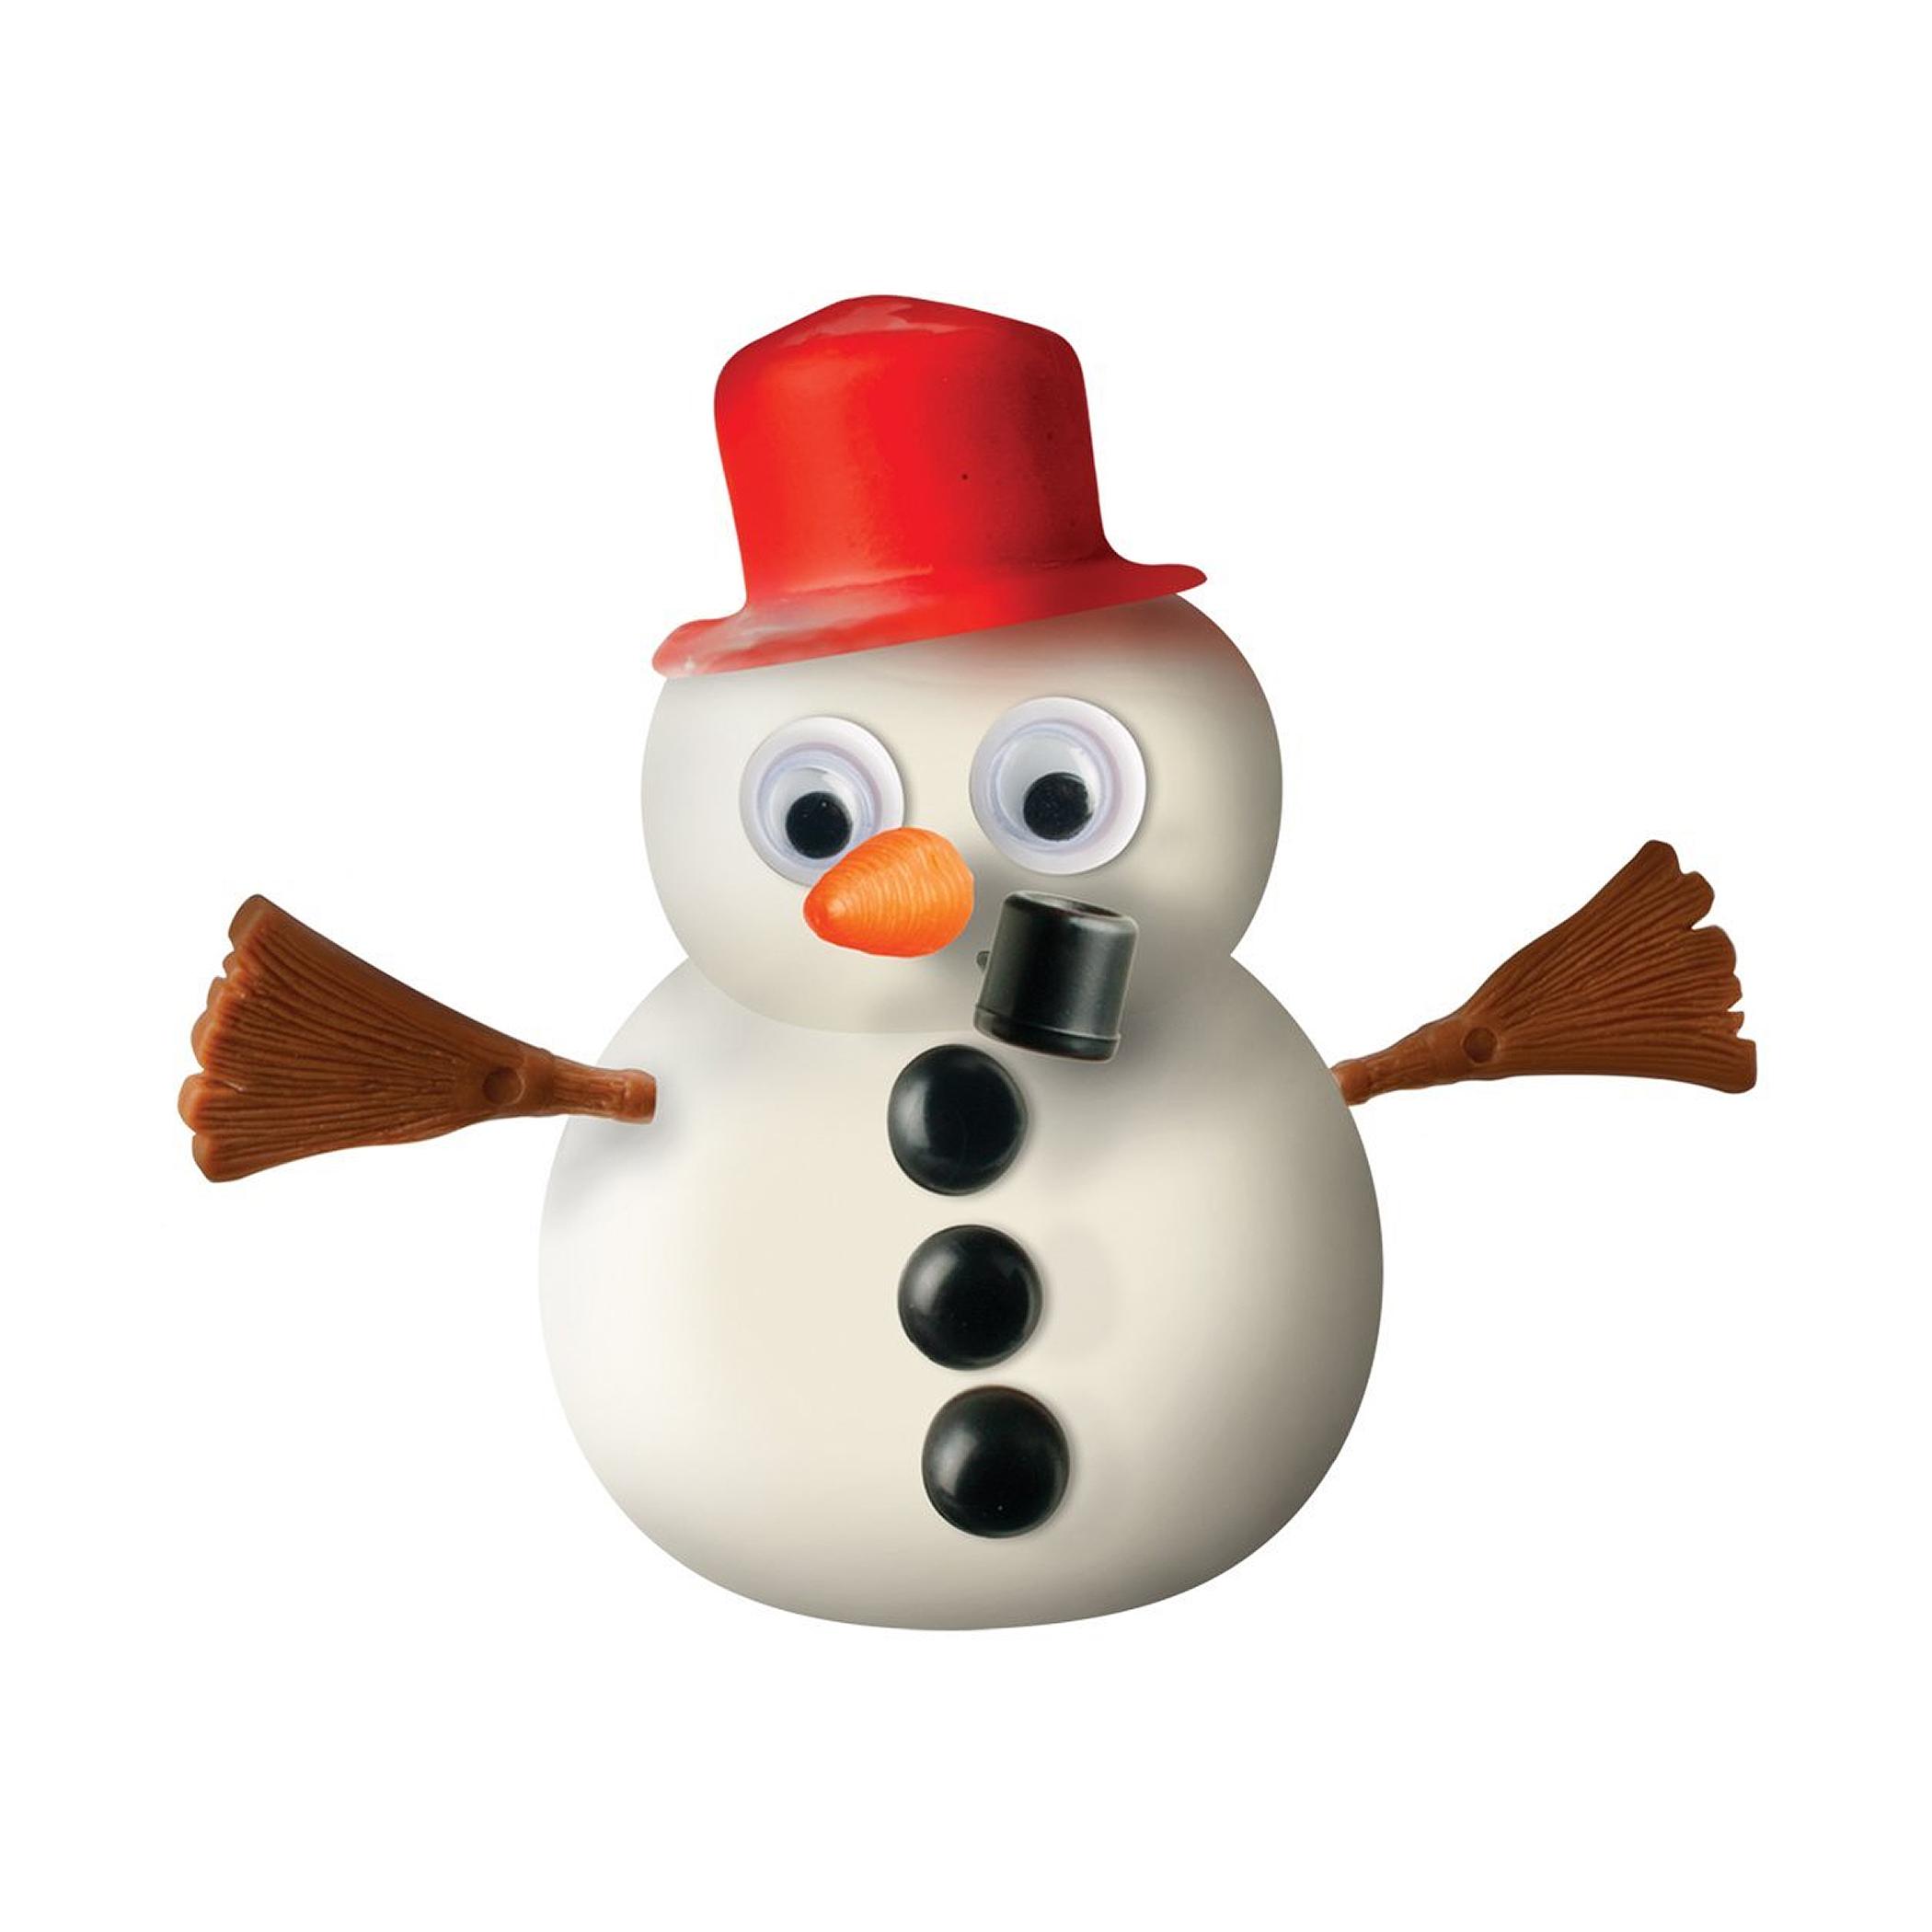  Flexible Flyer Build a Snowman Kit & Snow Art Markers. Kids  Winter Toy Decorate Set, Black : Toys & Games